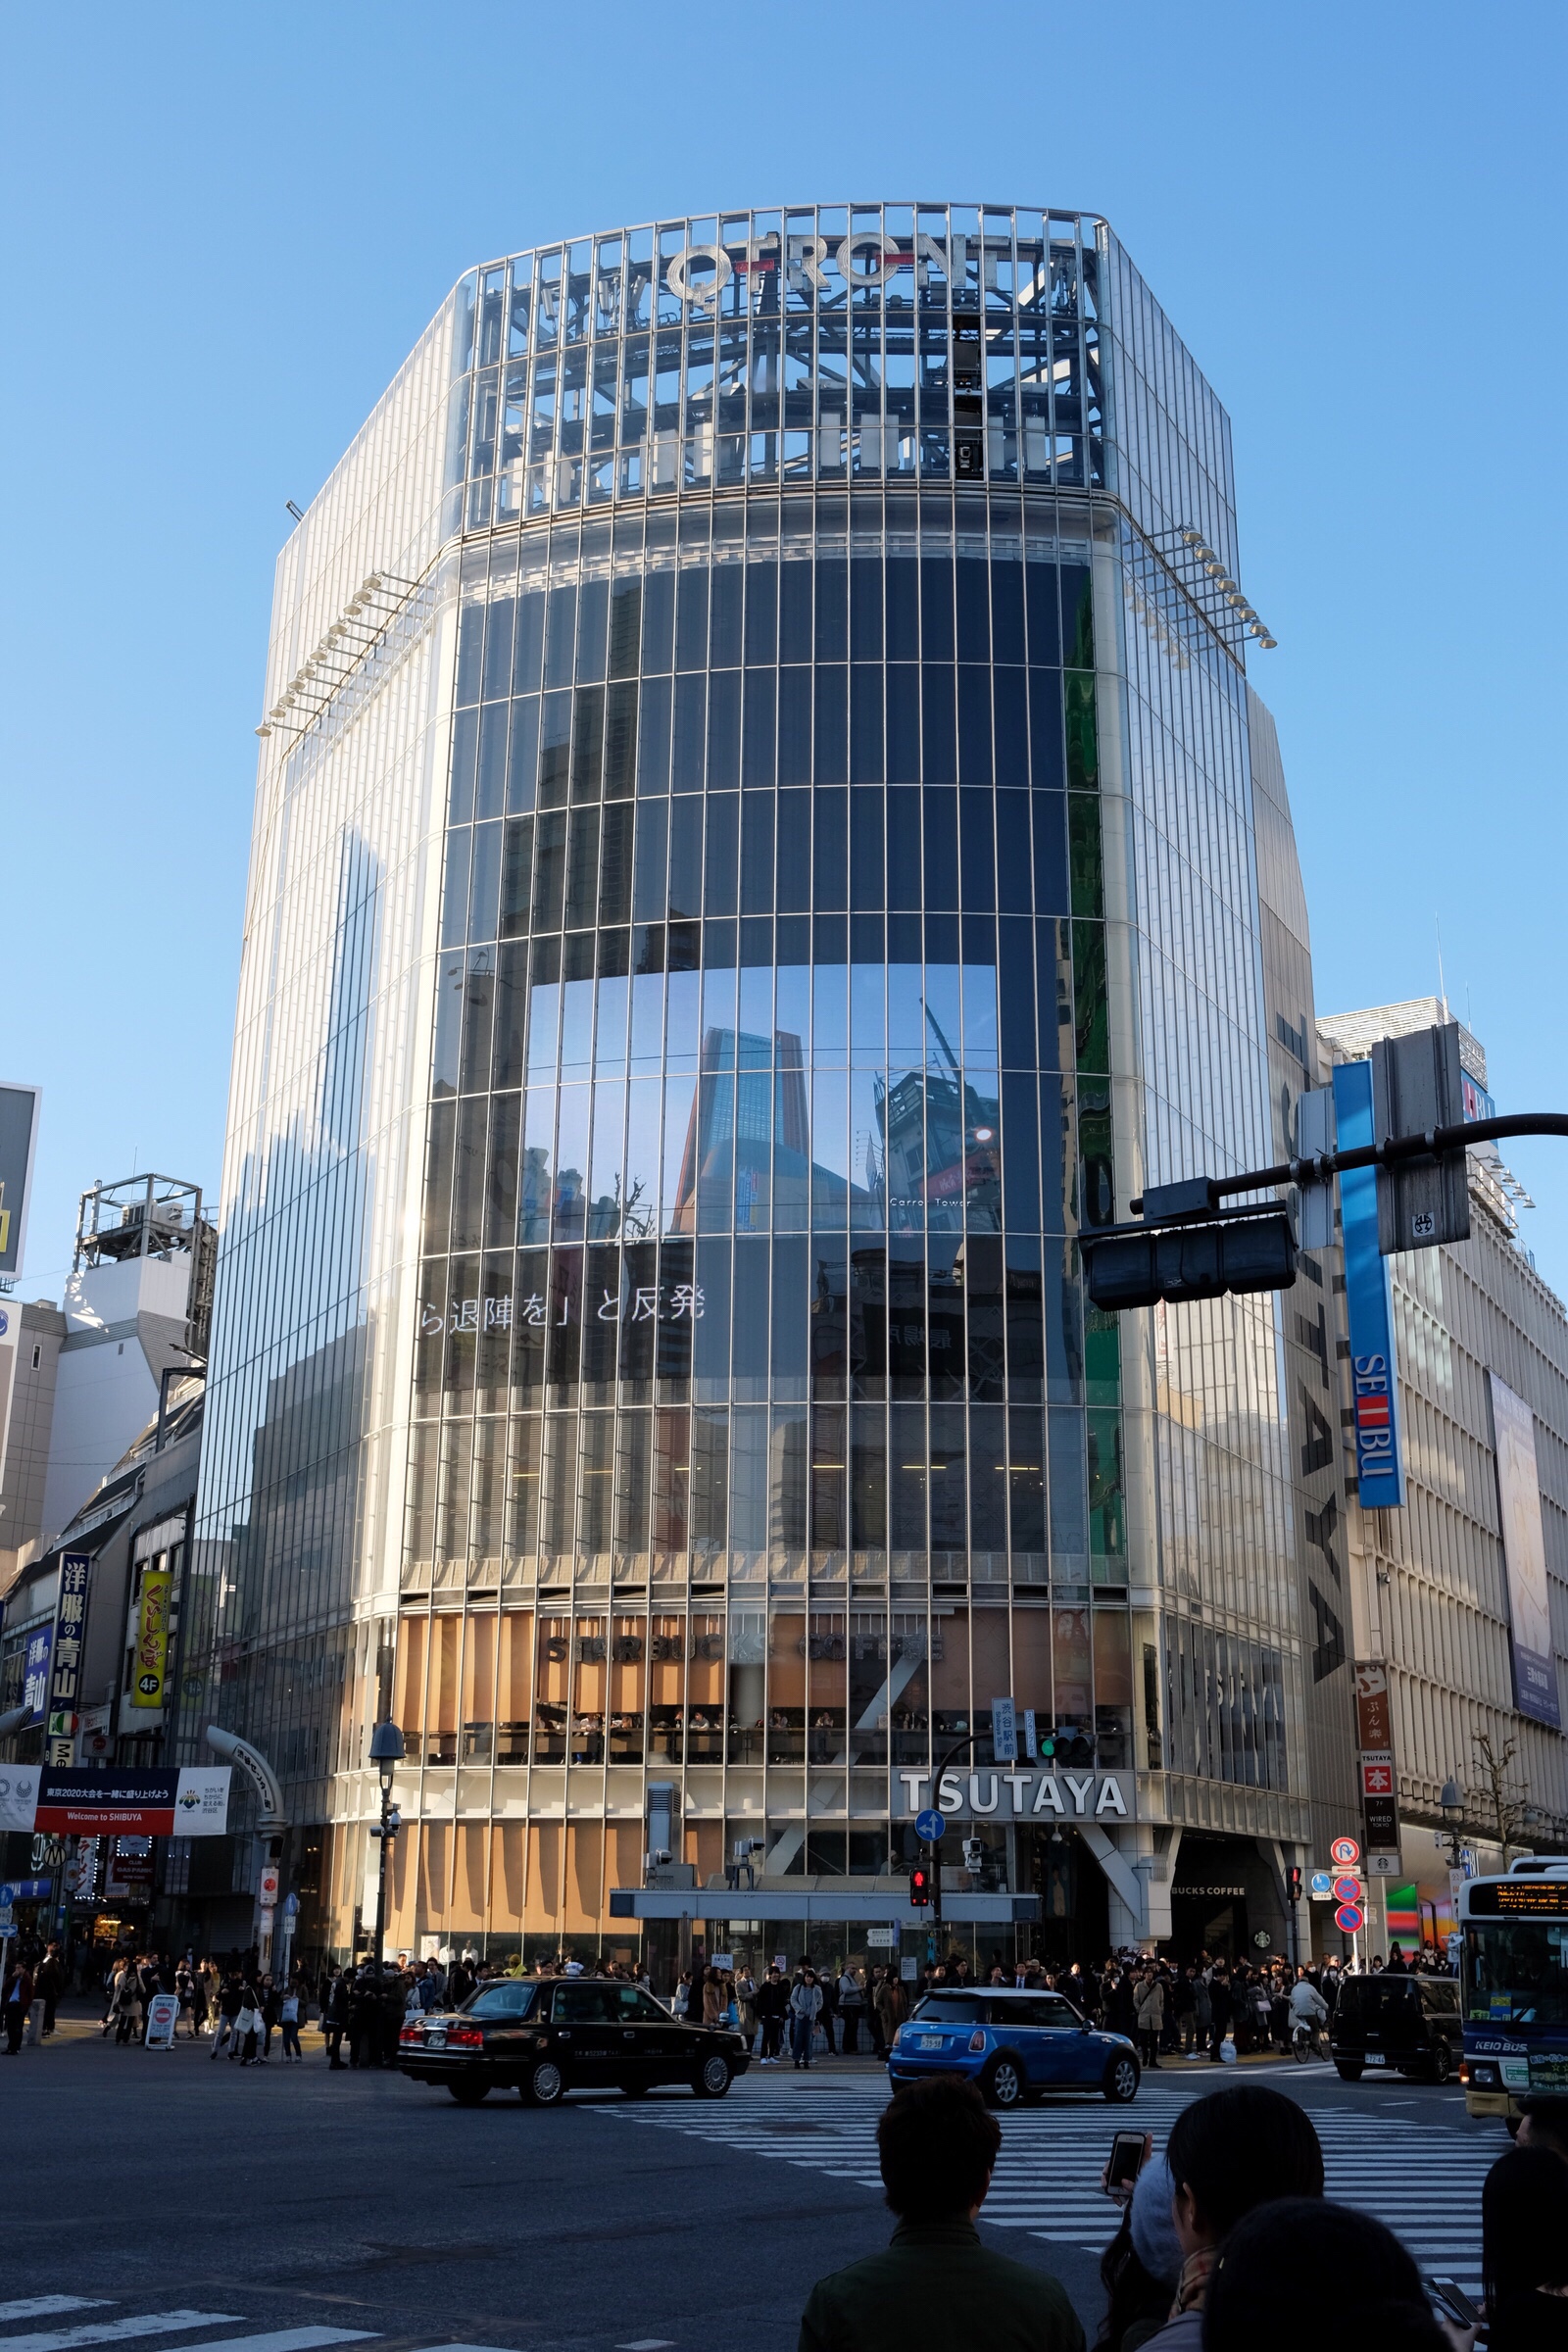 Japan – Tokyo – Shibuya Crossing